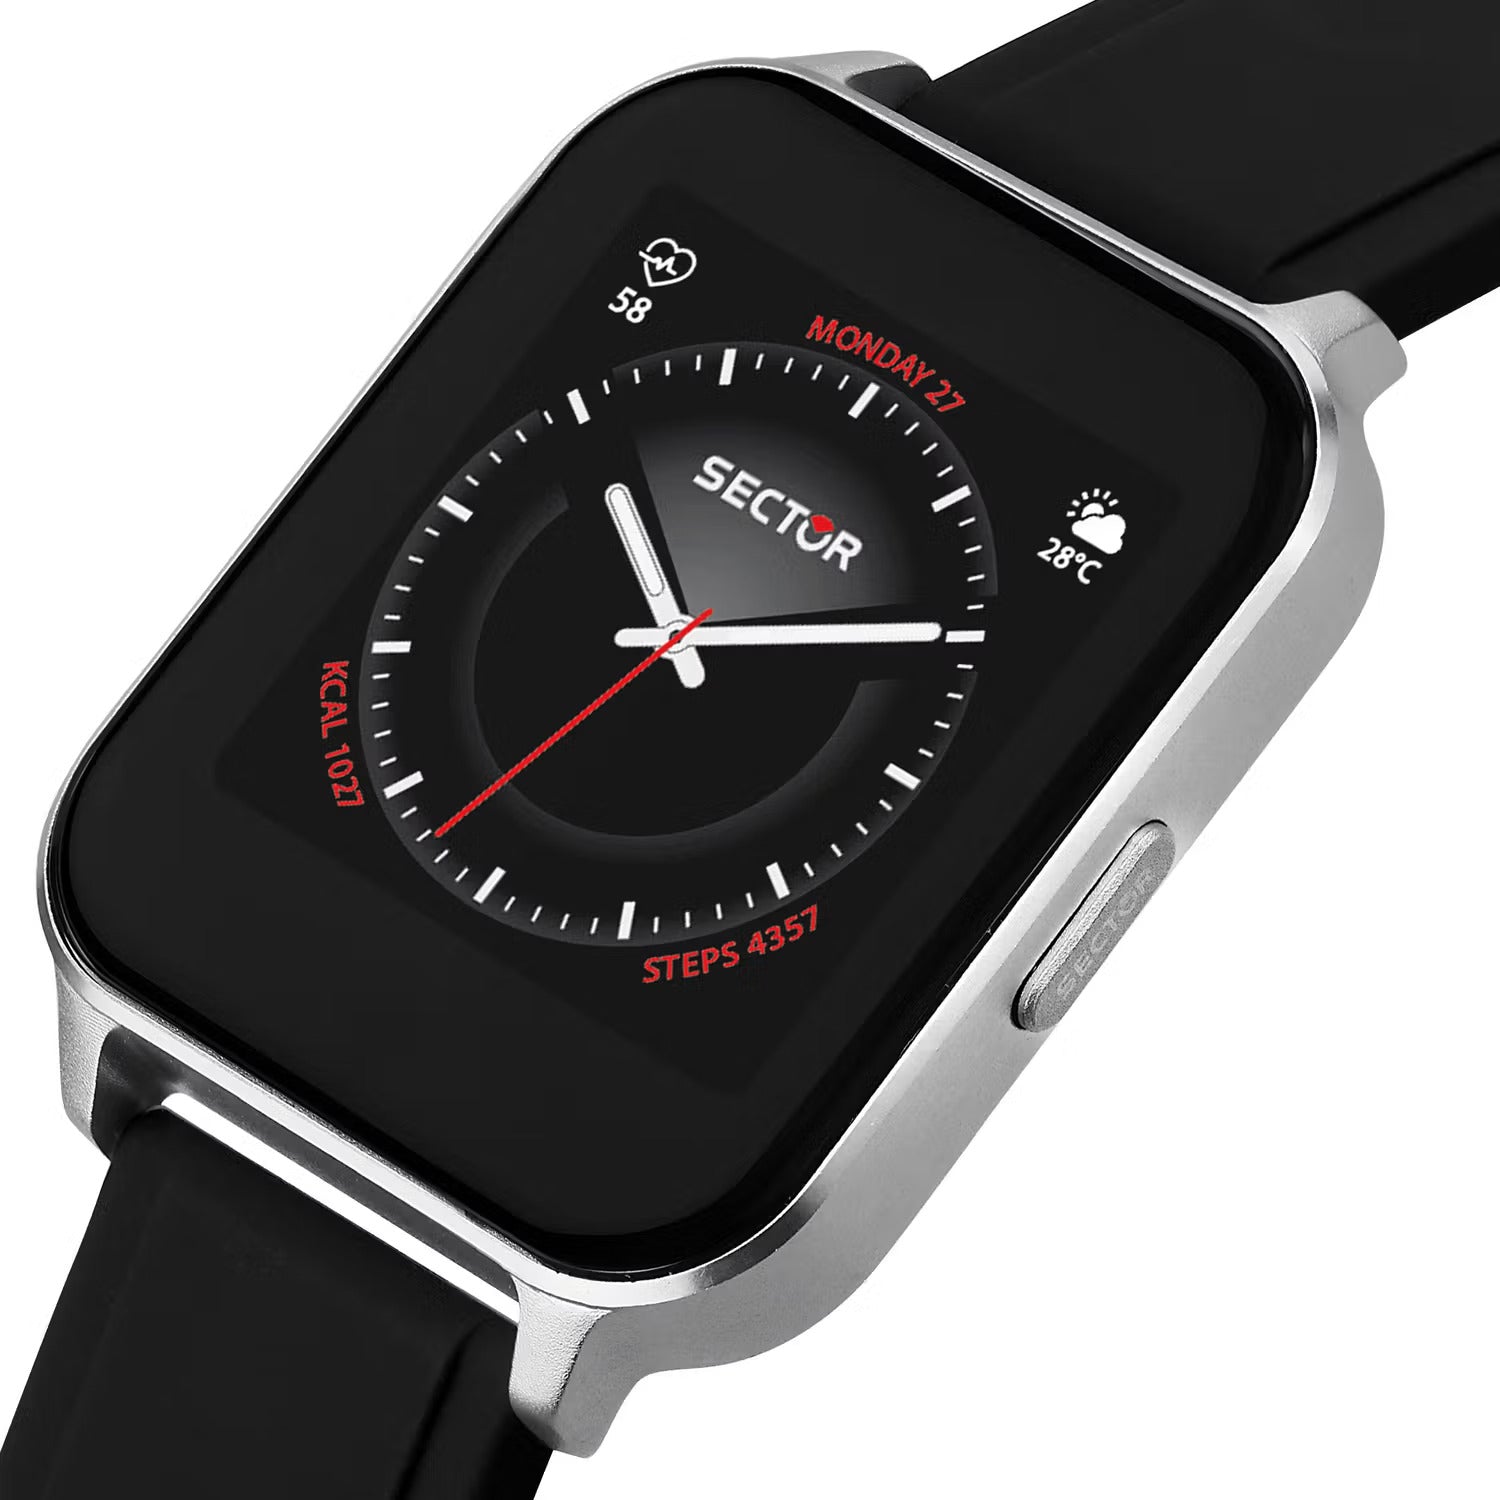 Sector Smartwatch S-05 Watch (R3251550003)